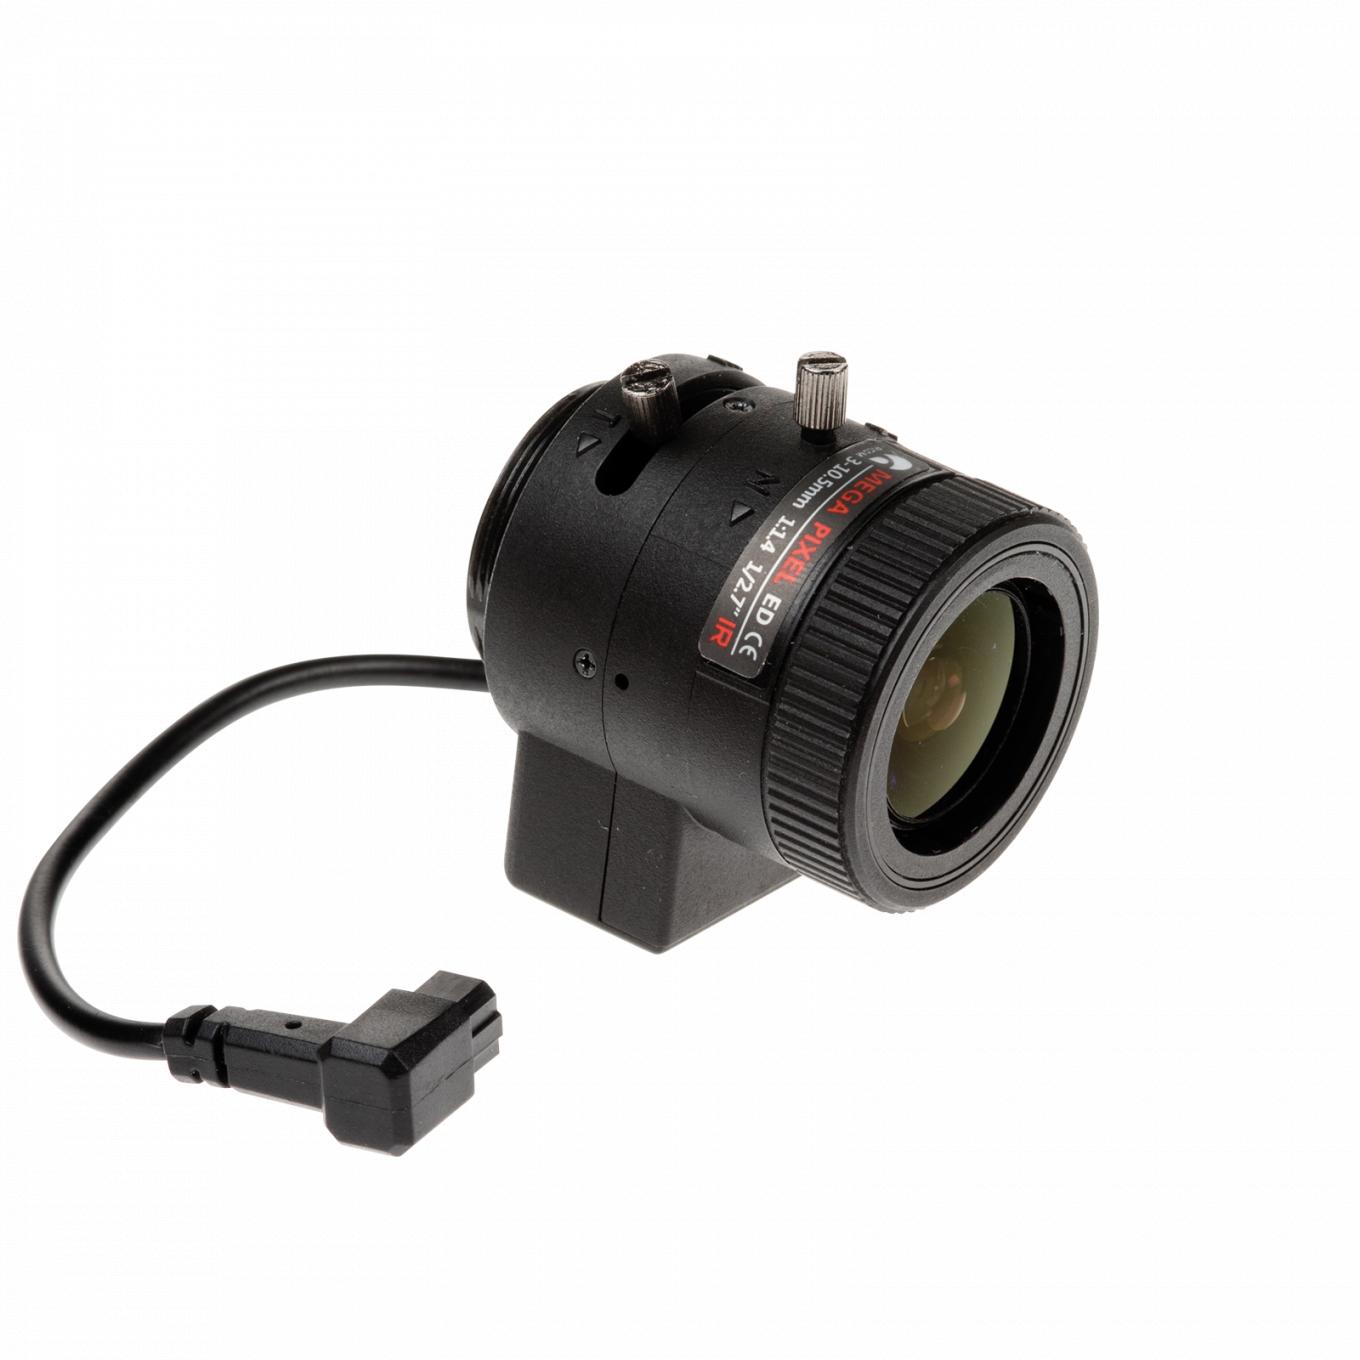 AXIS Lens CS 3-10.5 mm F1.4 DC-Iris 2 MP negro con cable